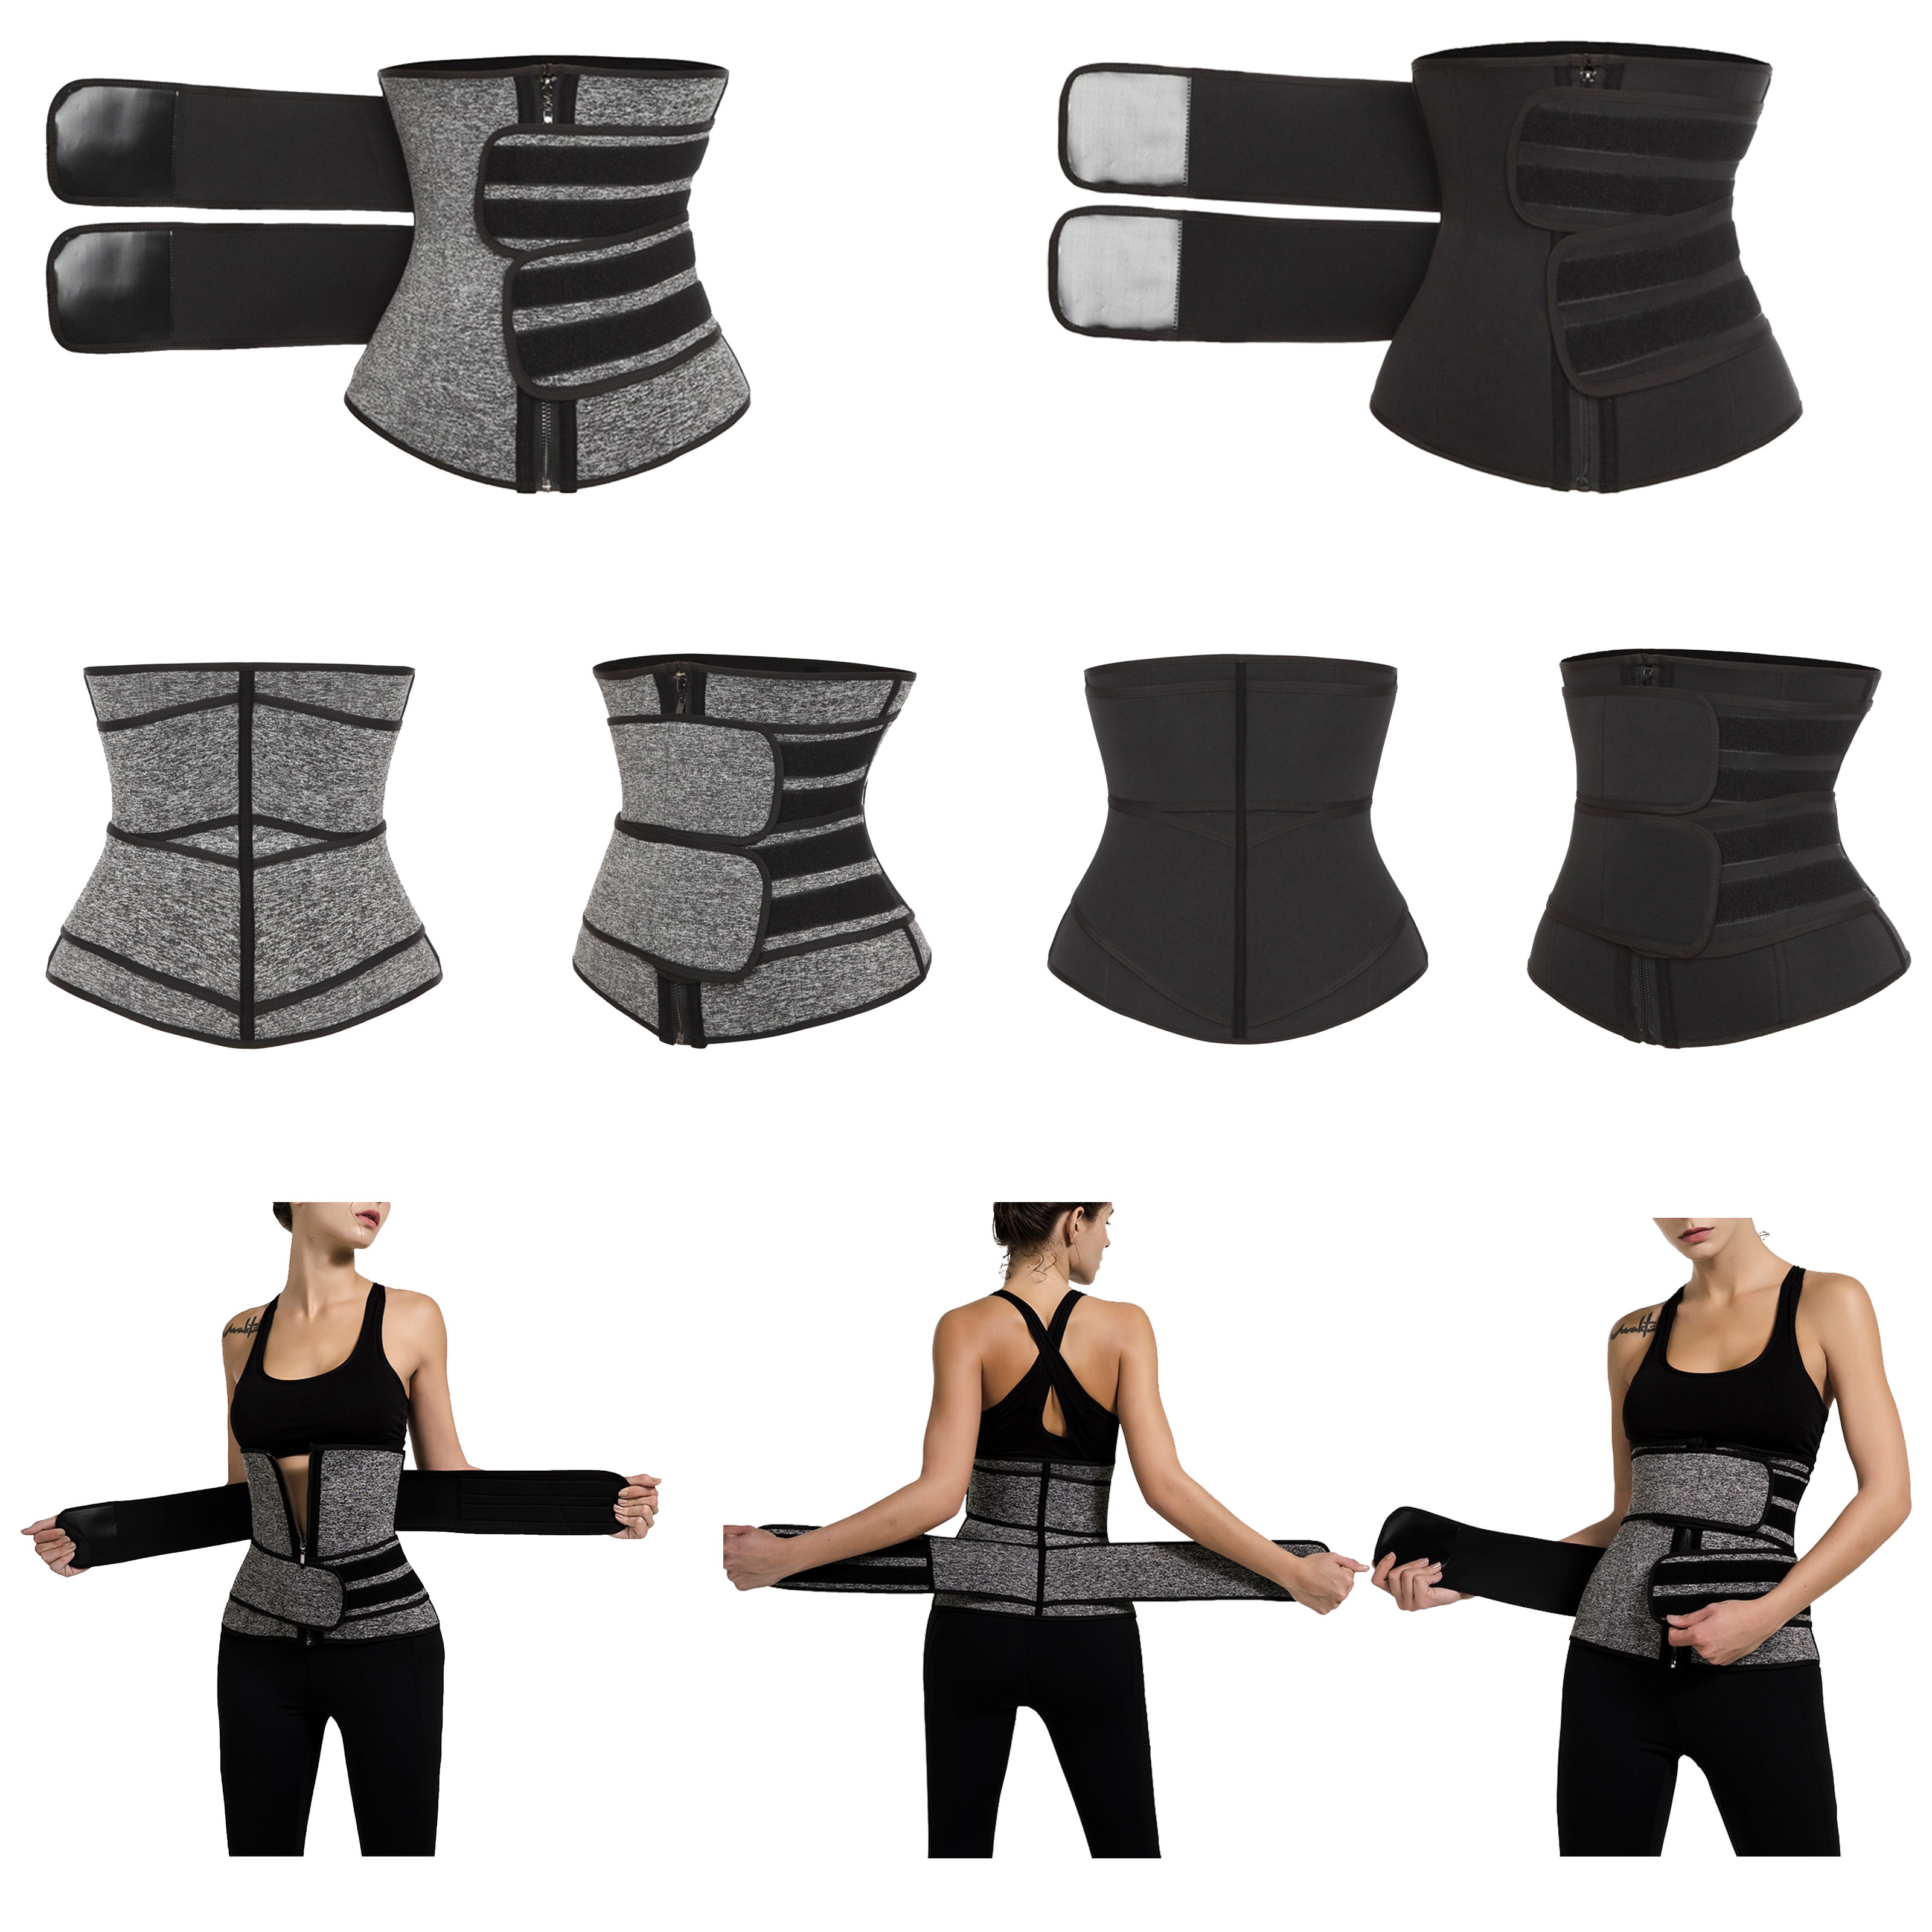 Waist Trainer - Sauna Waist Trainer Corset Sweat Belt for Weight Loss Compression Trimmer Workout Fitness